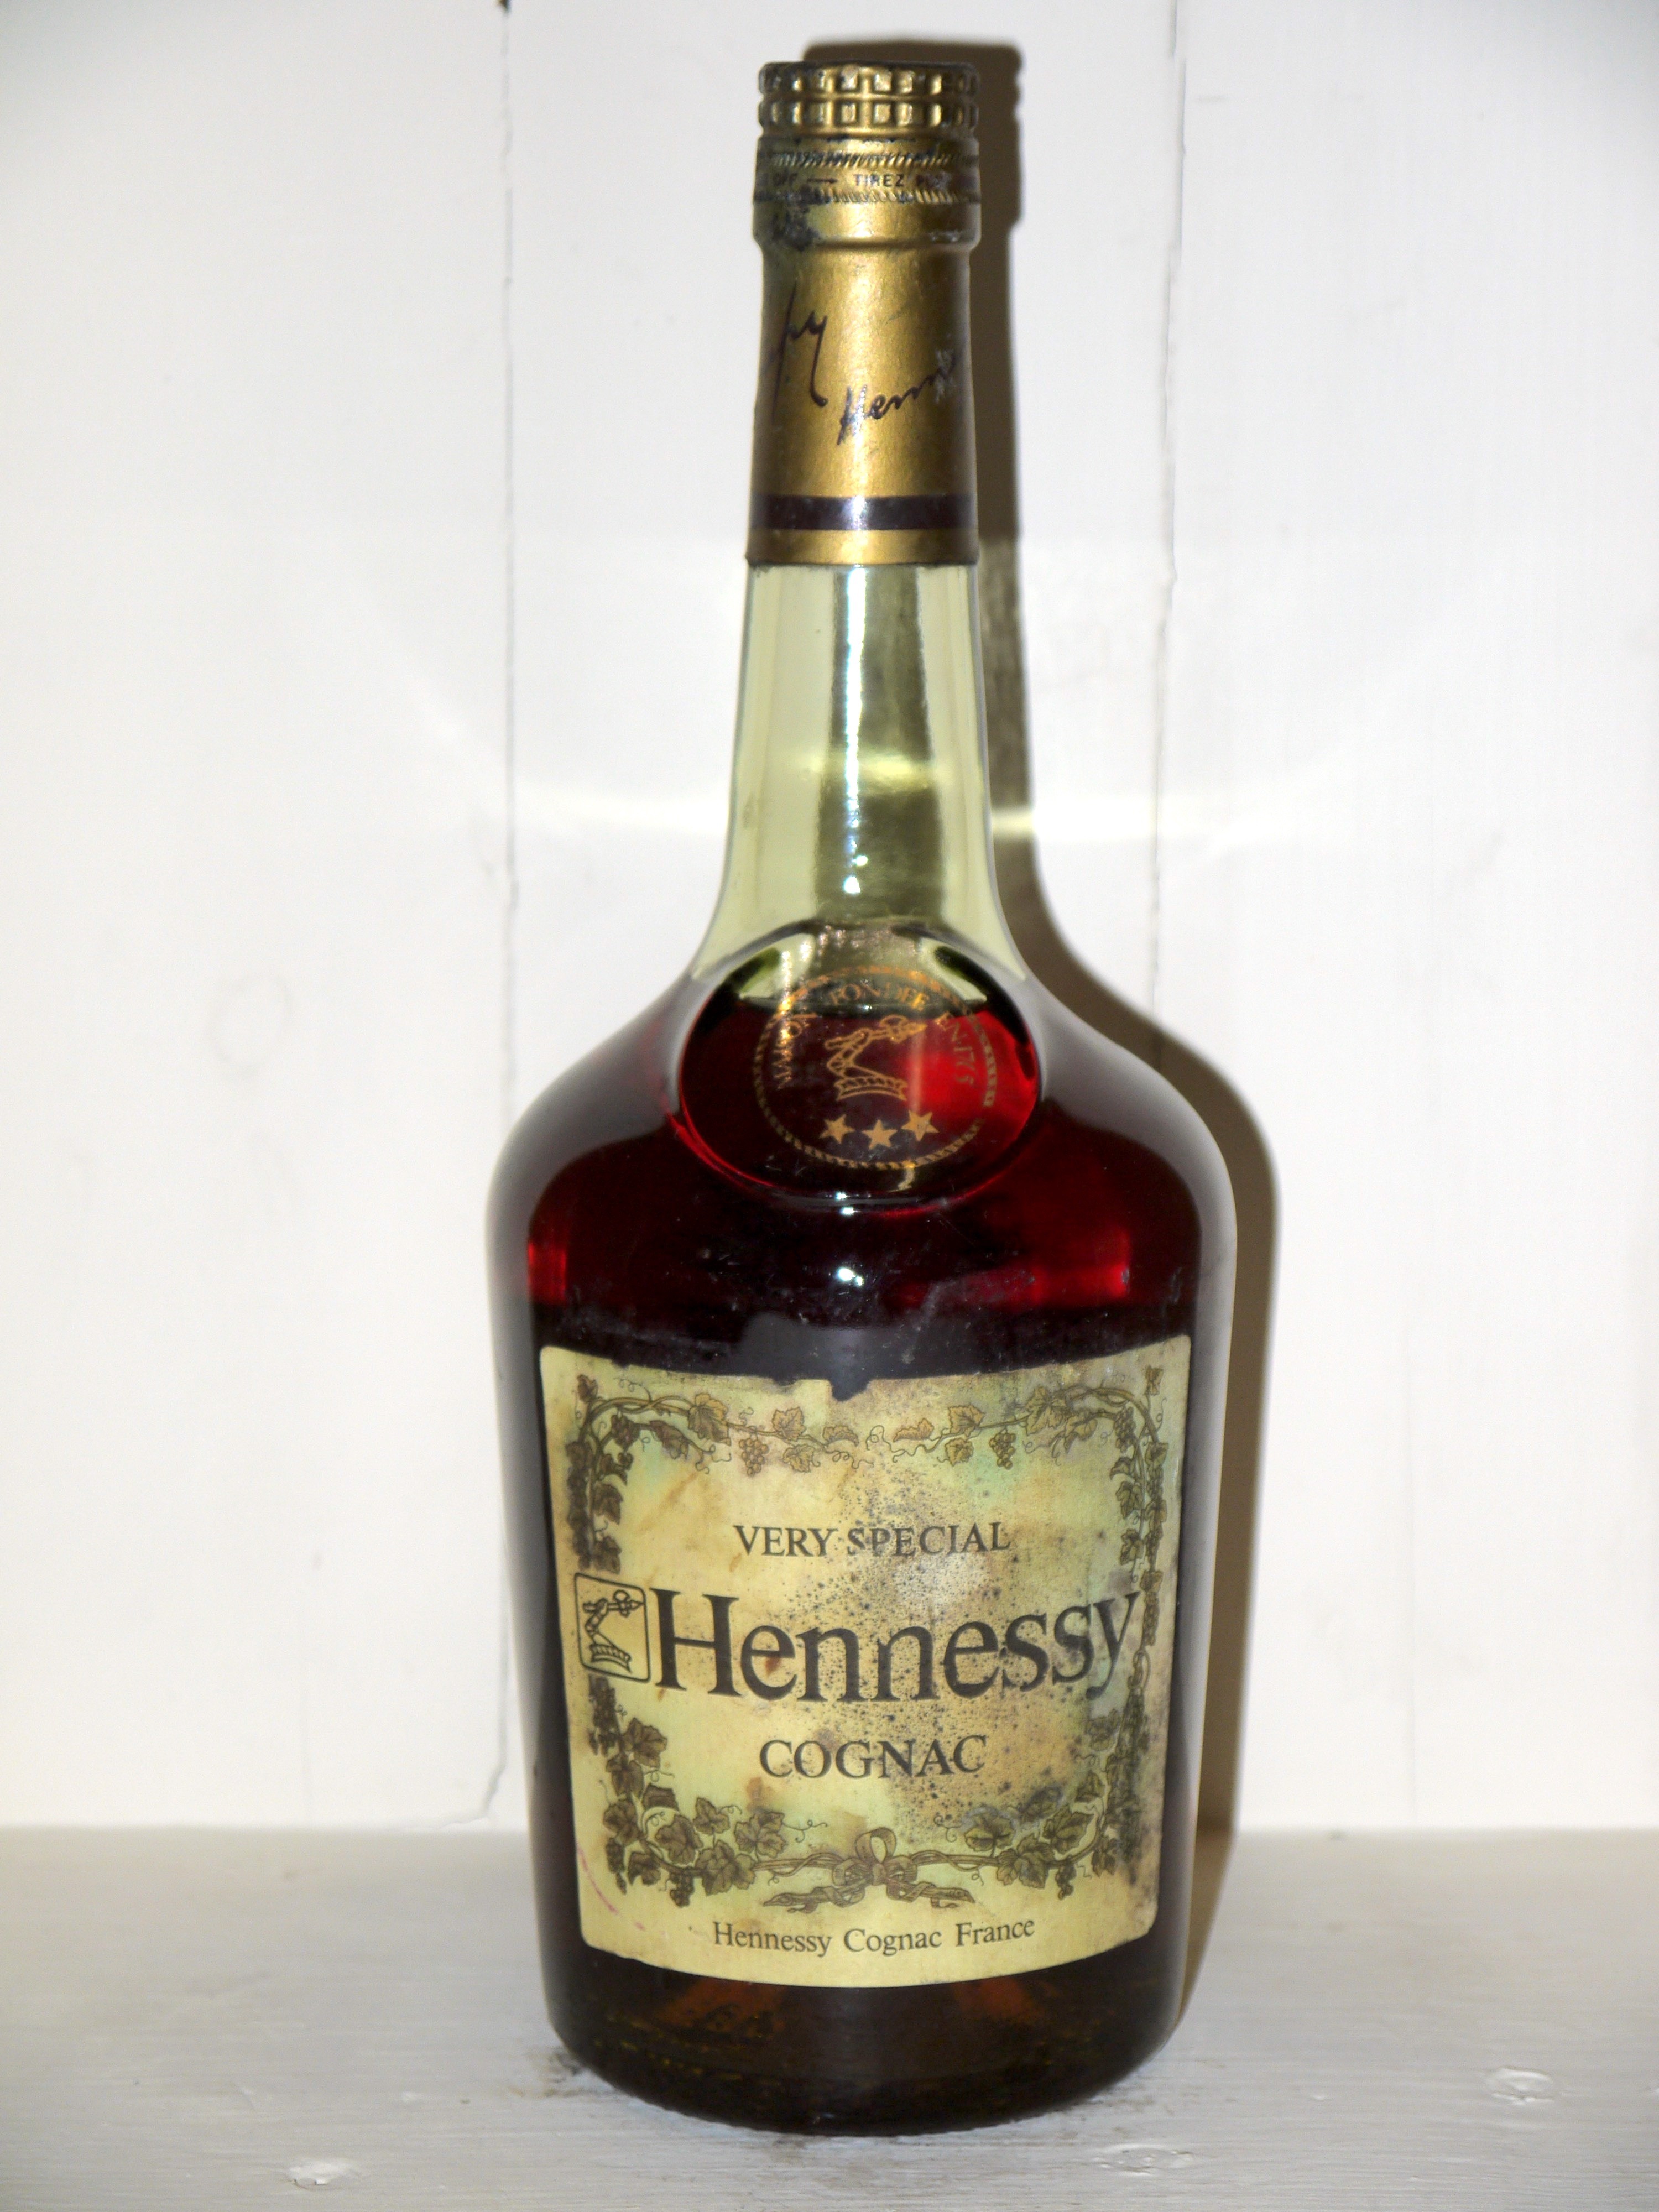 Send Hennessy VS Cognac Gift Set with Glasses Online!